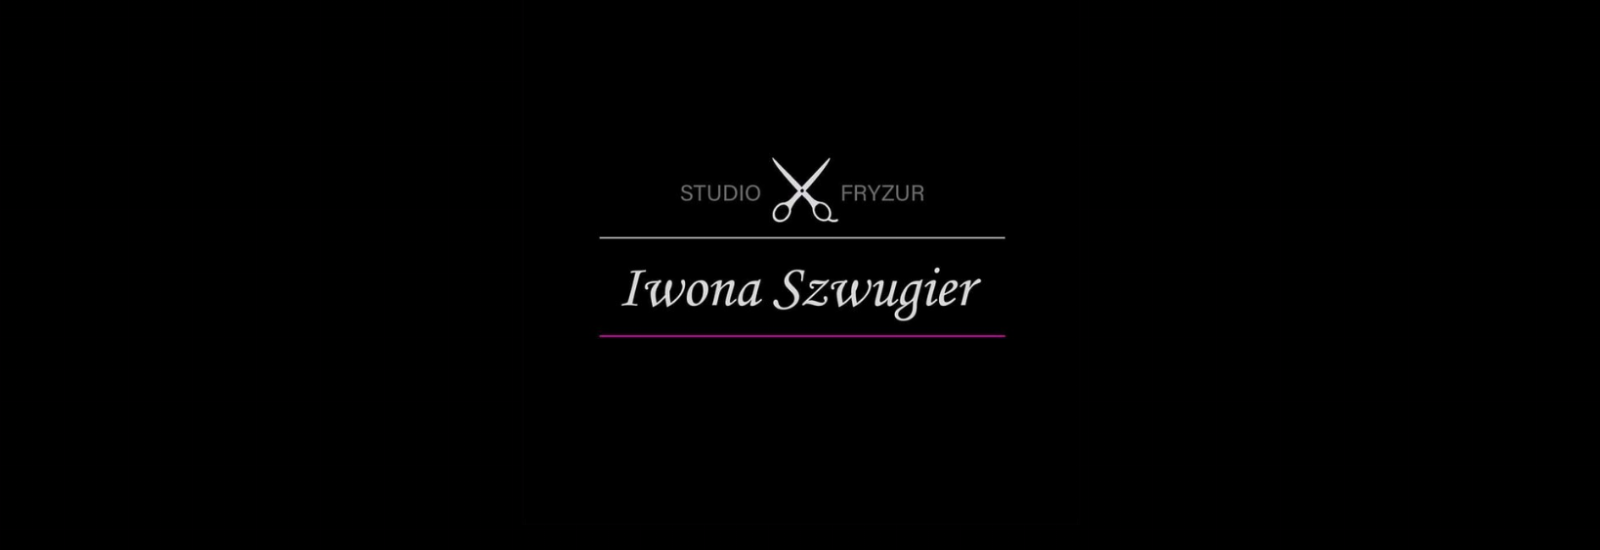 STUDIO FRYZUR Iwona Szwugier